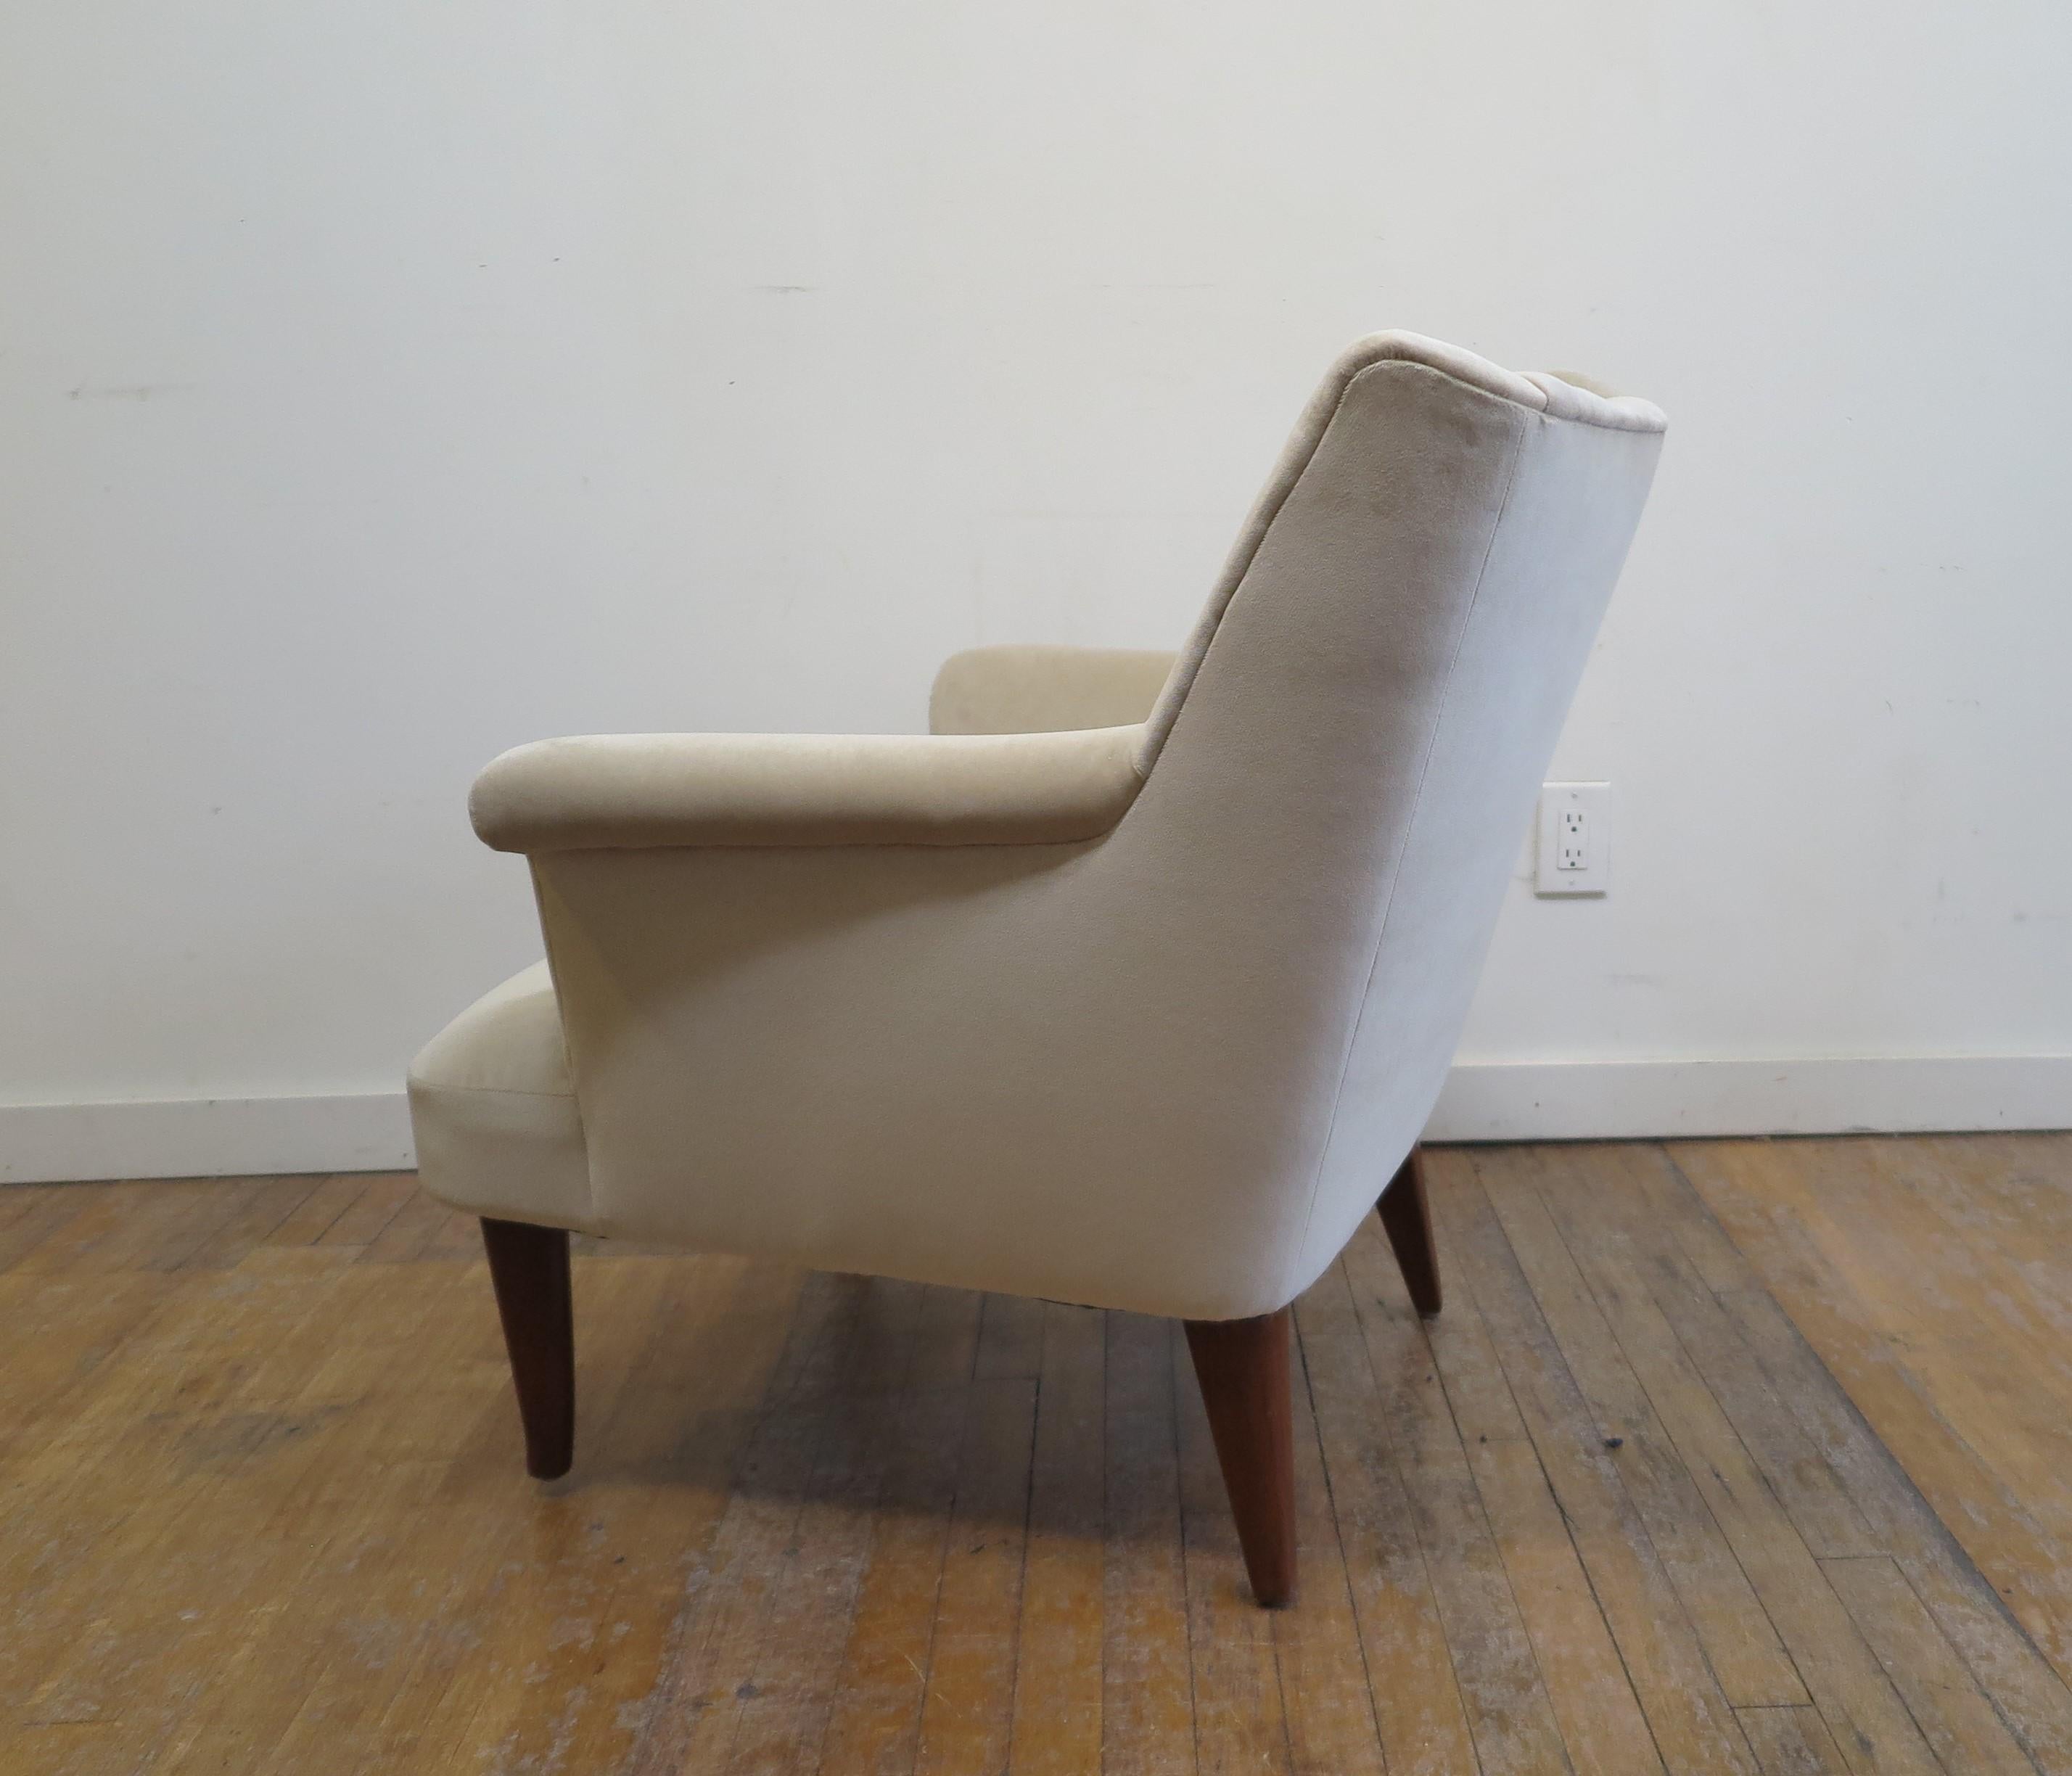 Mid-Century Modern Edward Wormley Lounge Chair #4796 for Dunbar For Sale